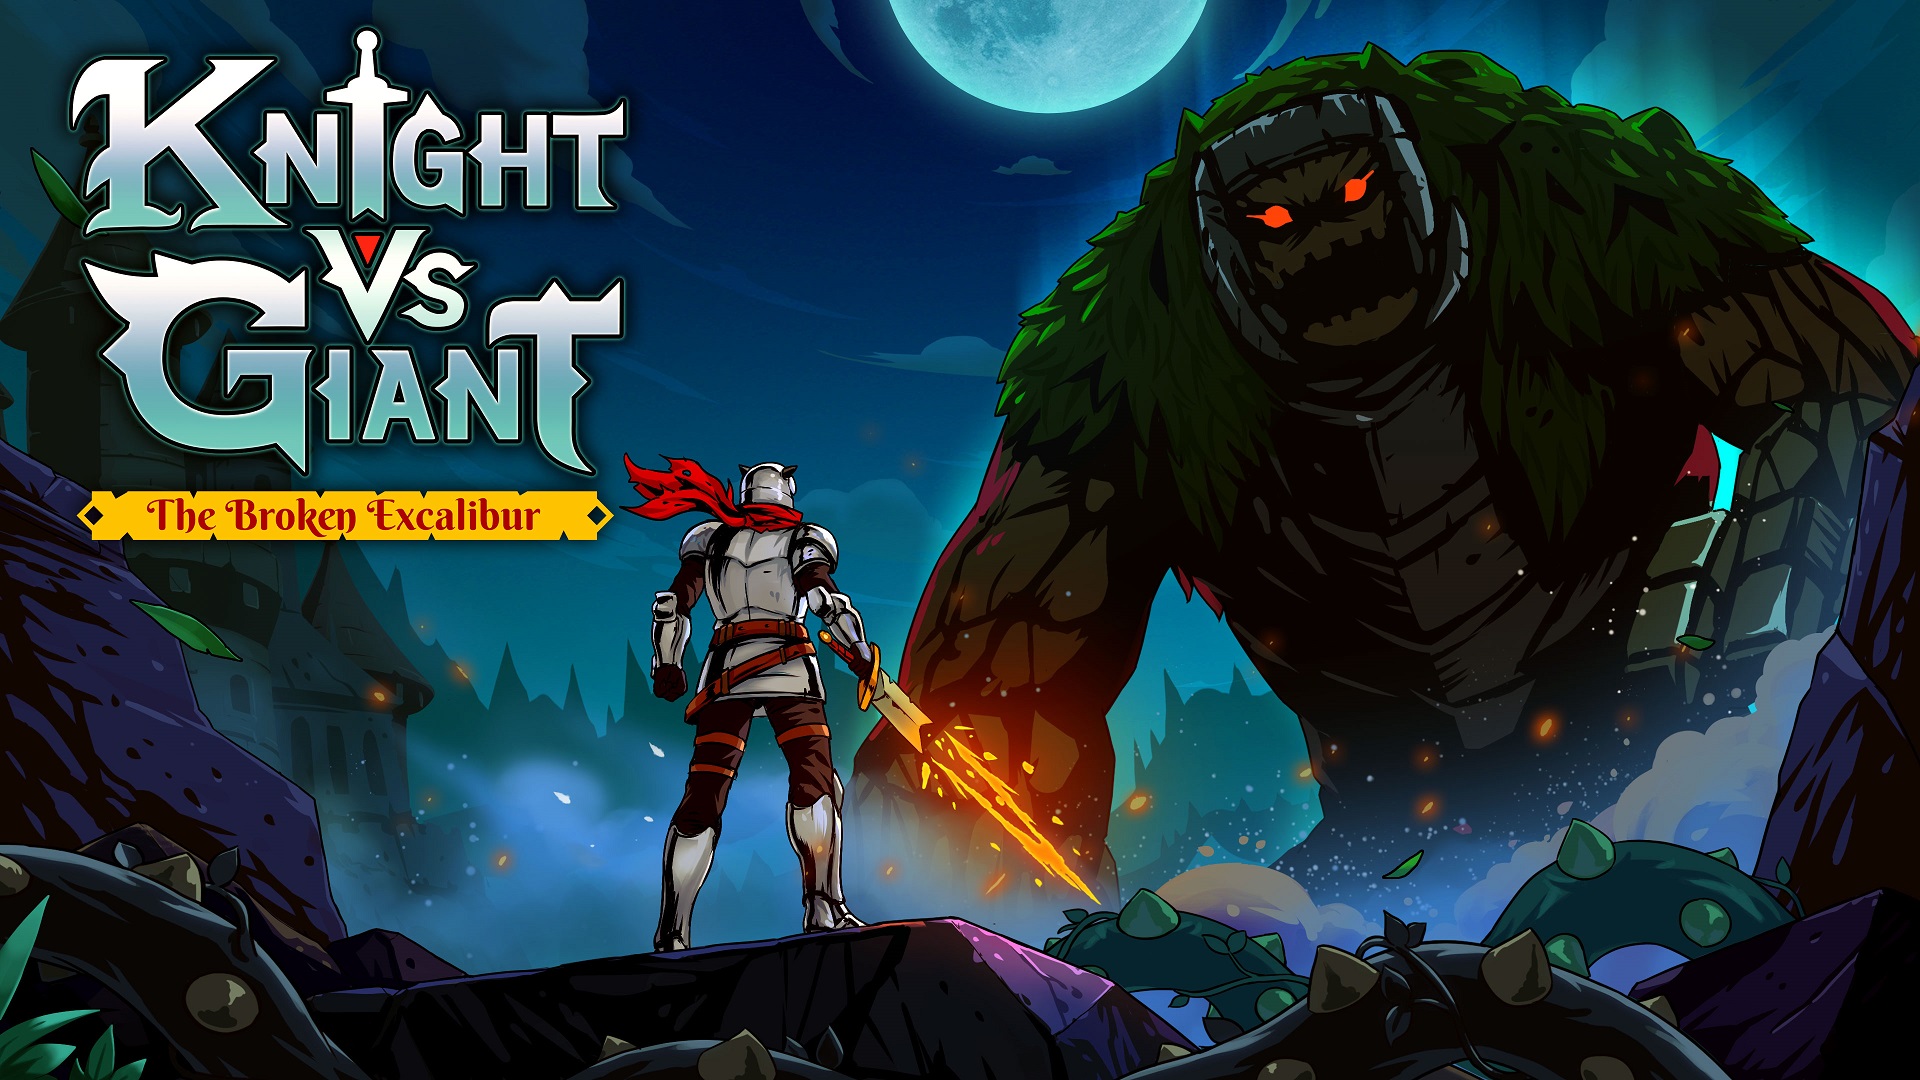 Knight vs Giant: The Broken Excalibur announced